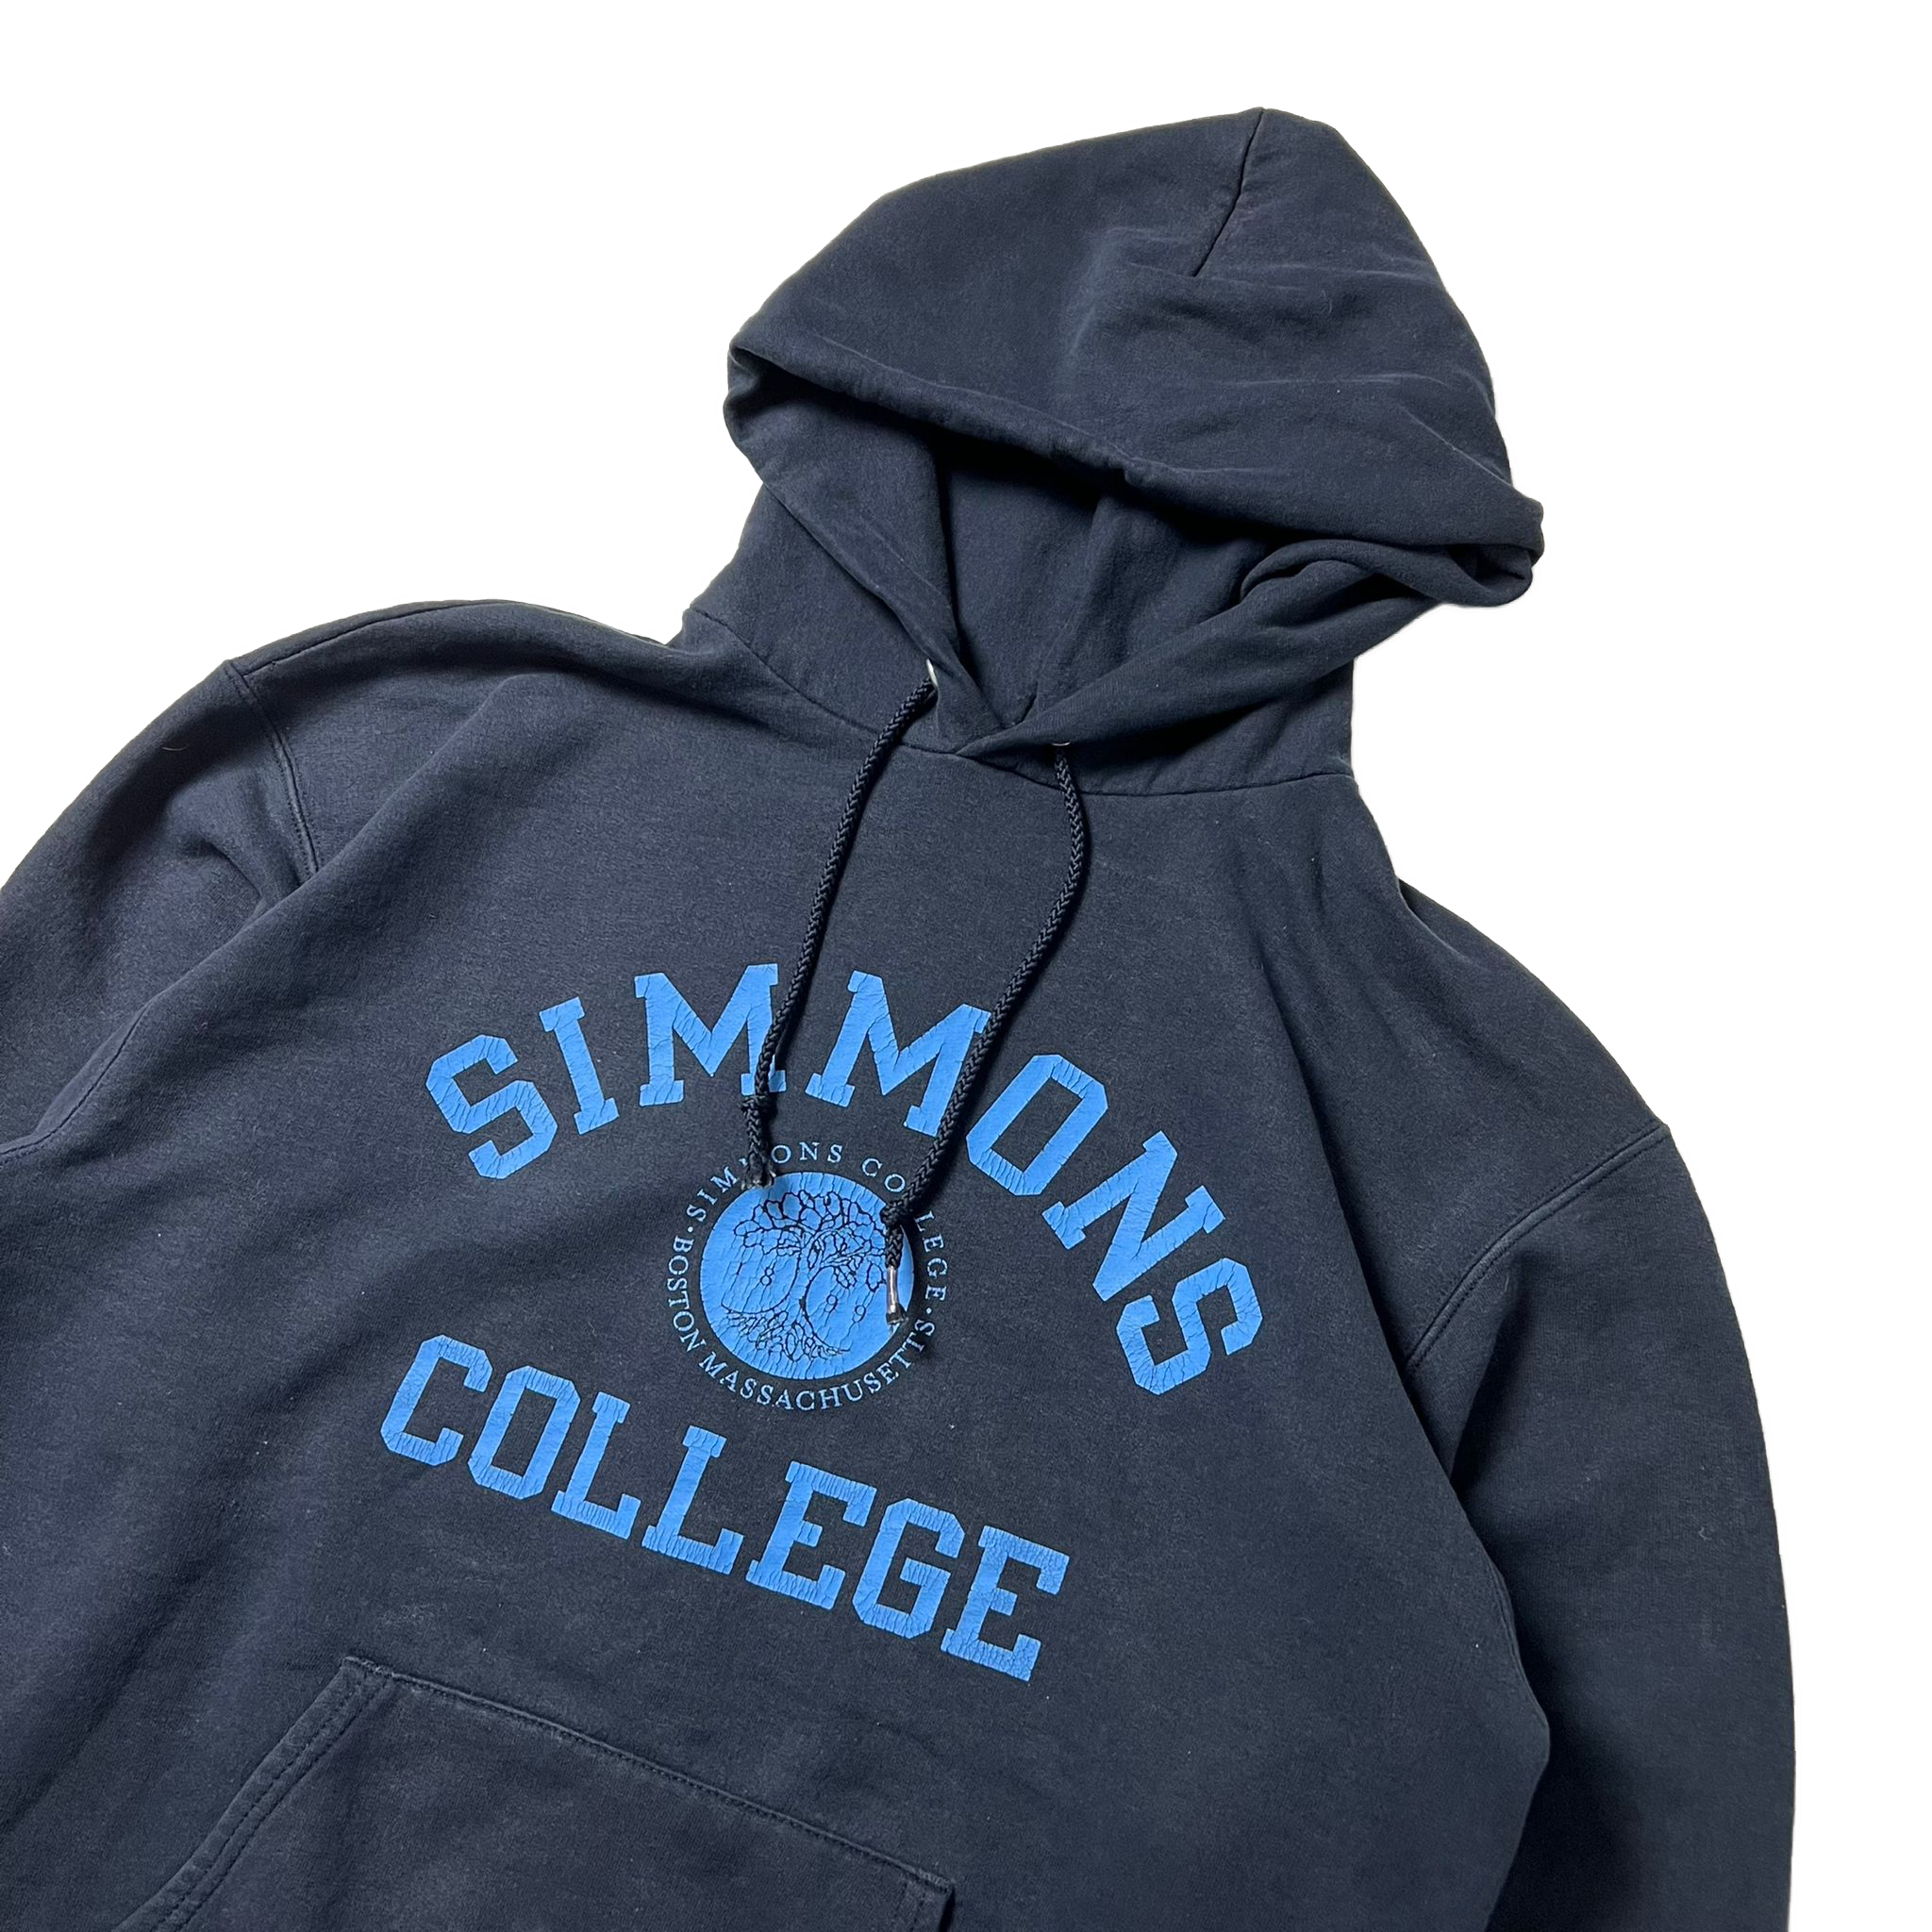 00's Champion College hoodie